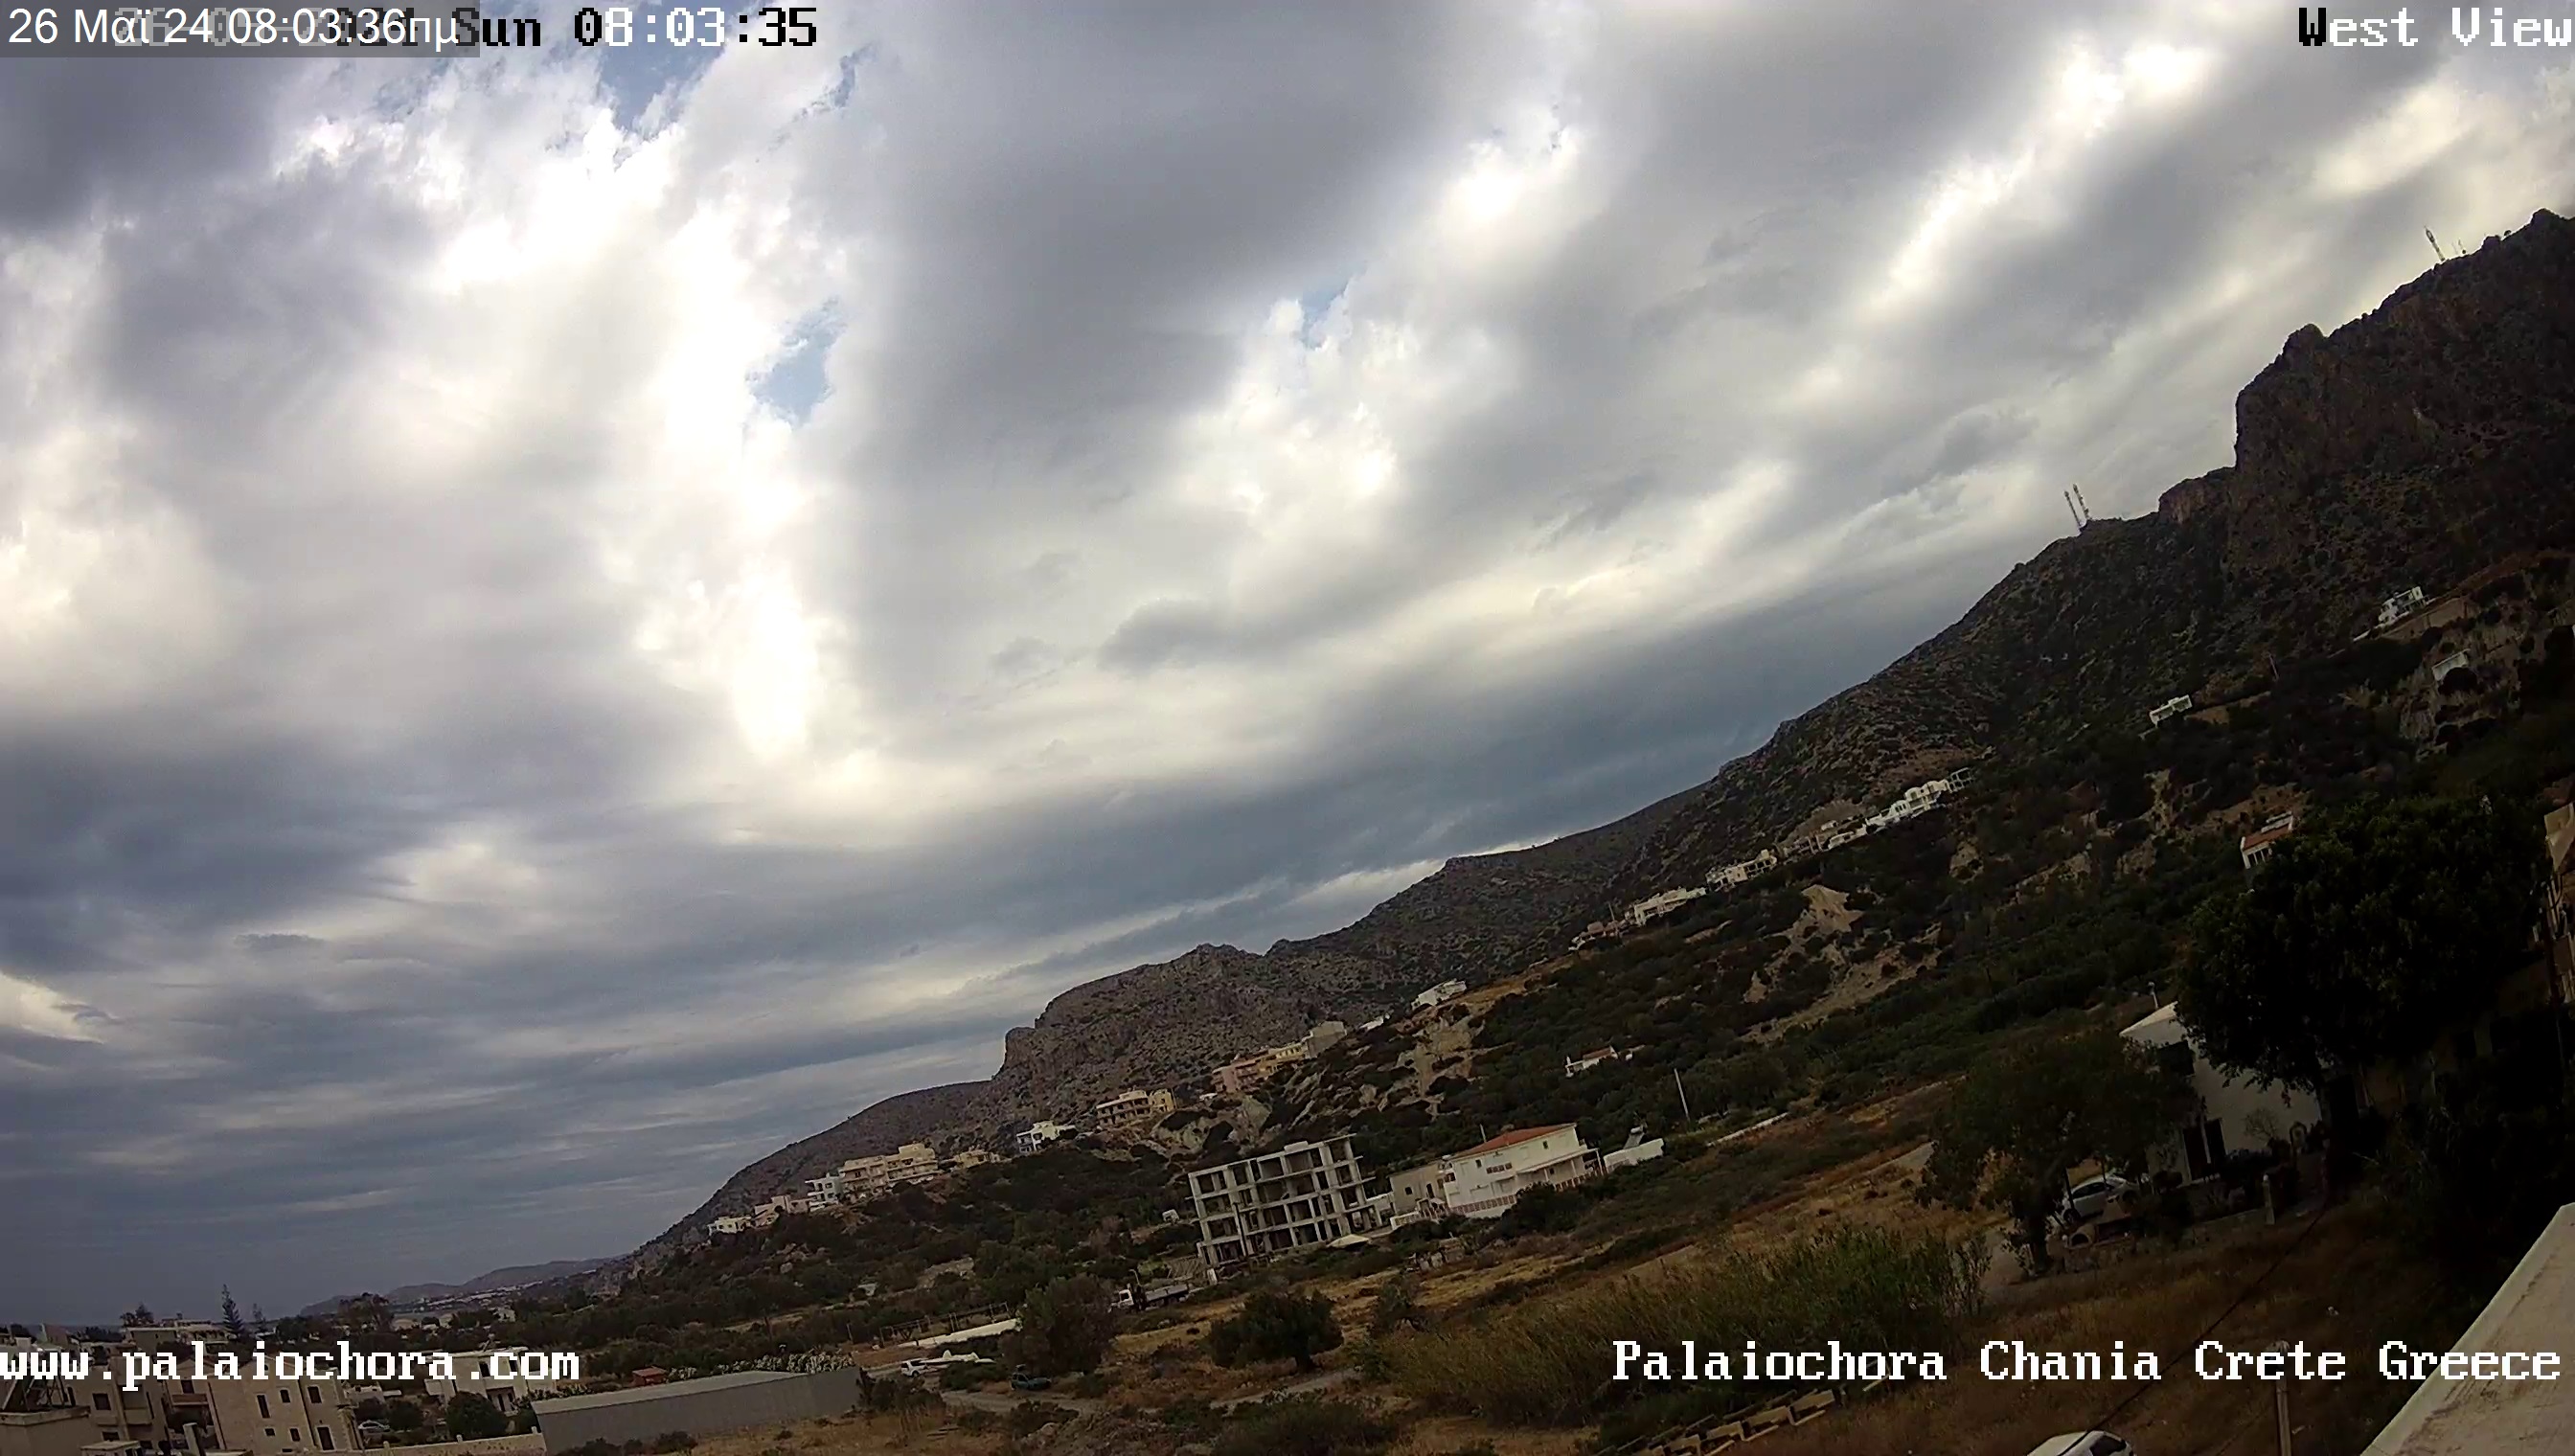 Paleochora (Crète) Ve. 08:08